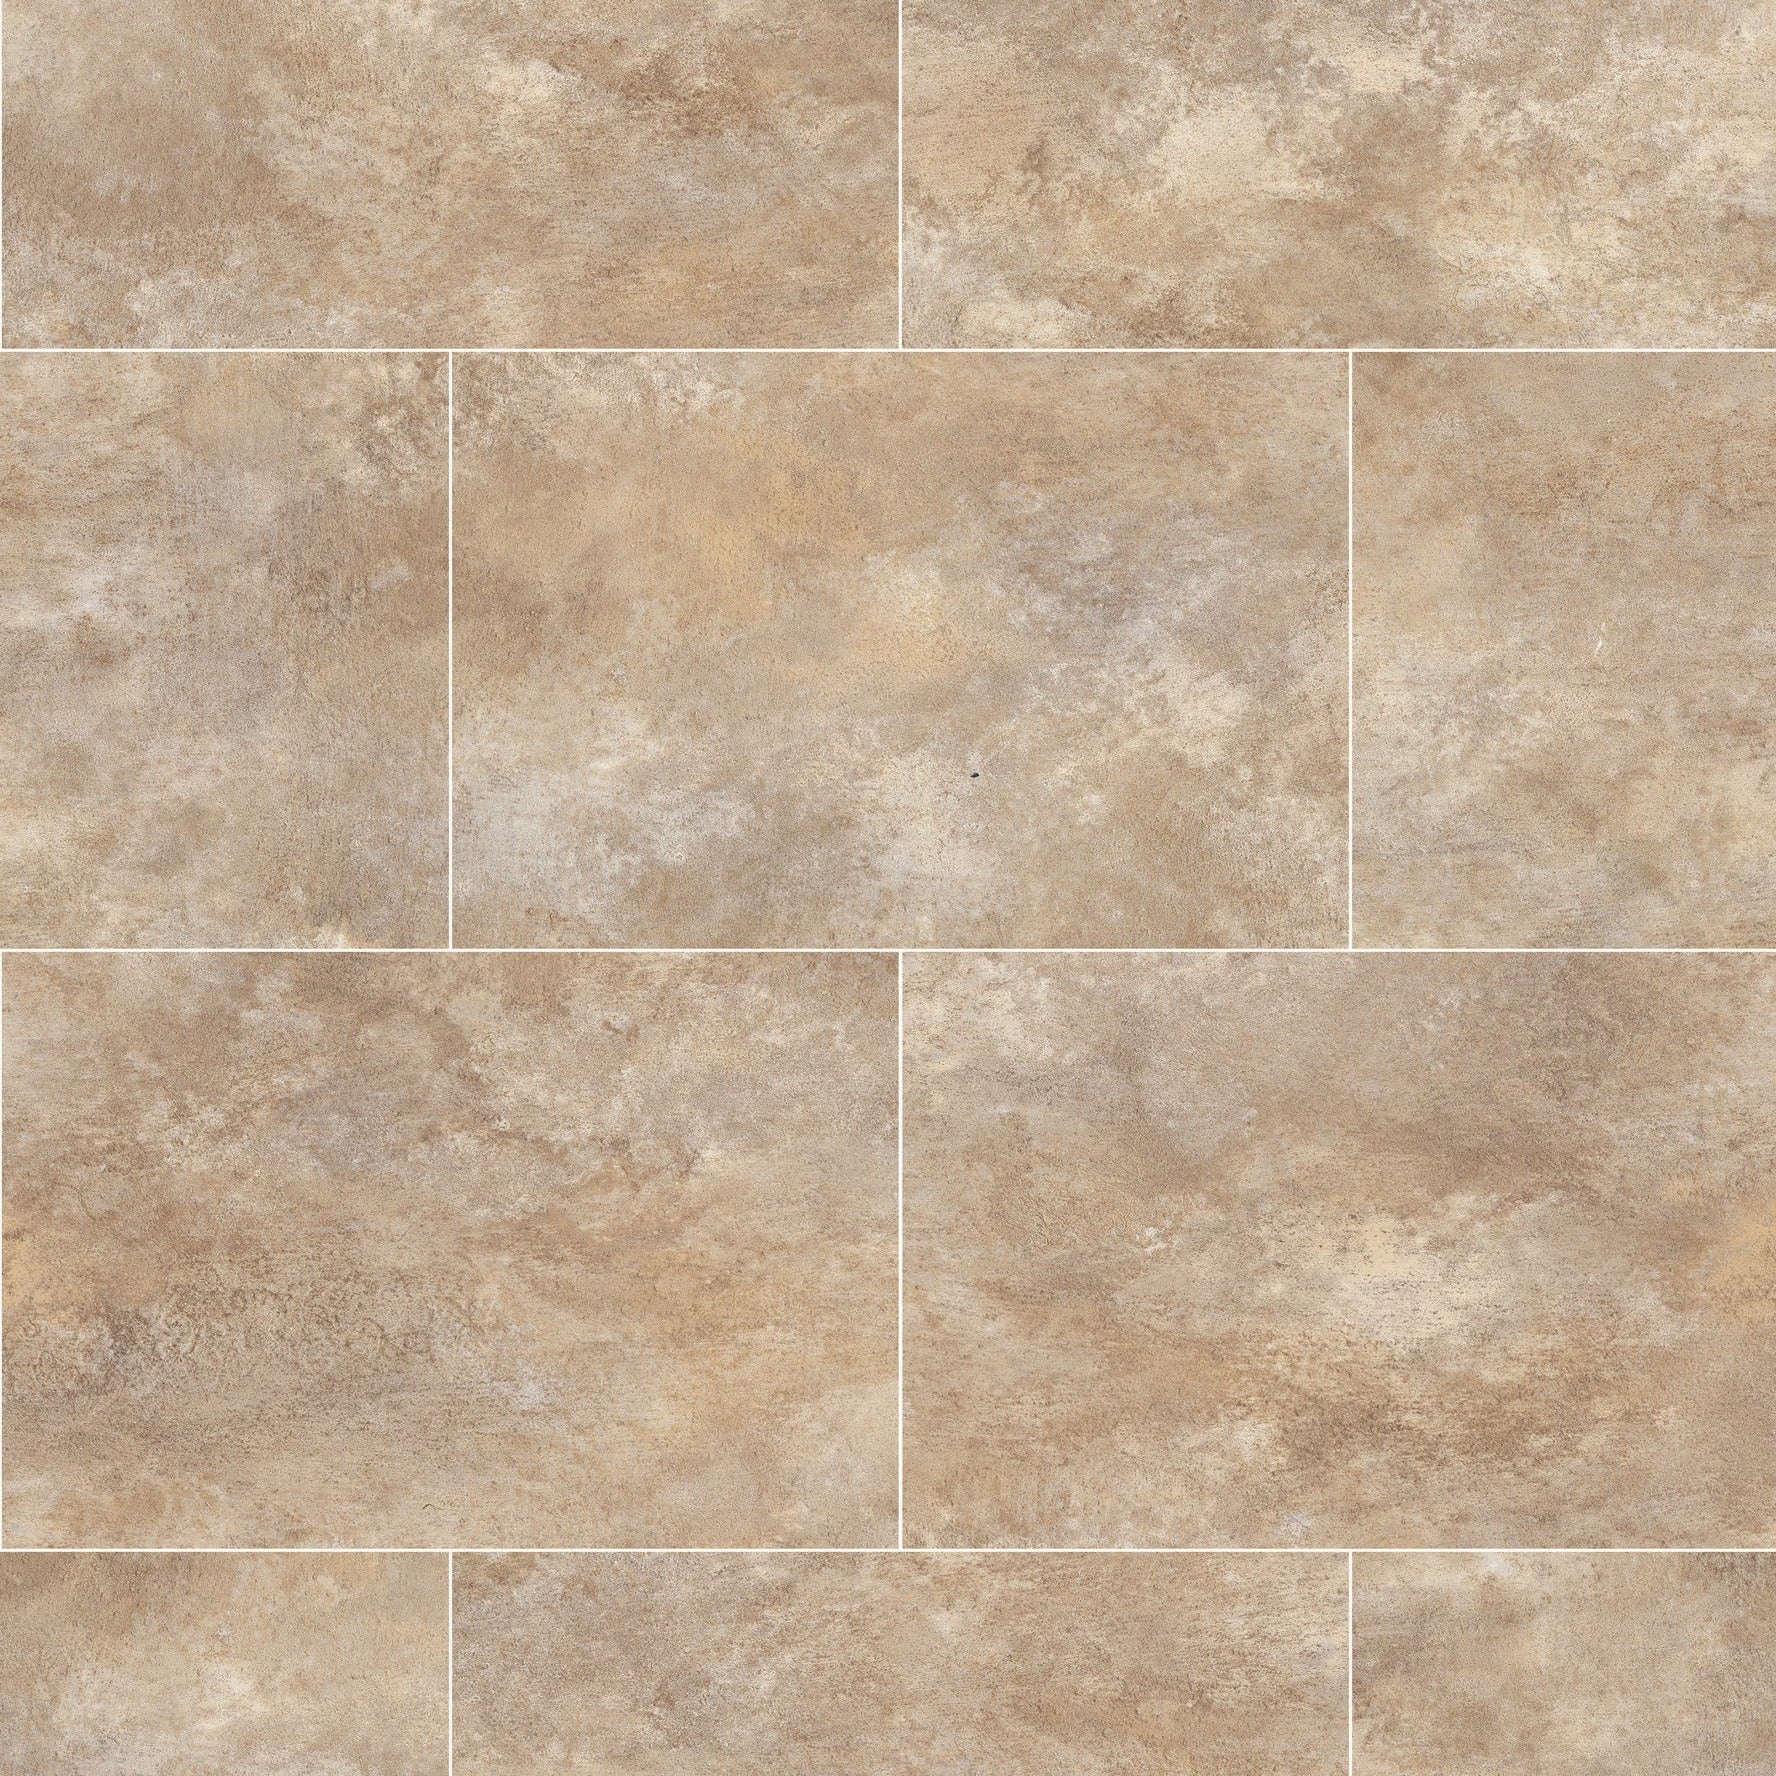 A beige stone effect LVT floor in a kitchen